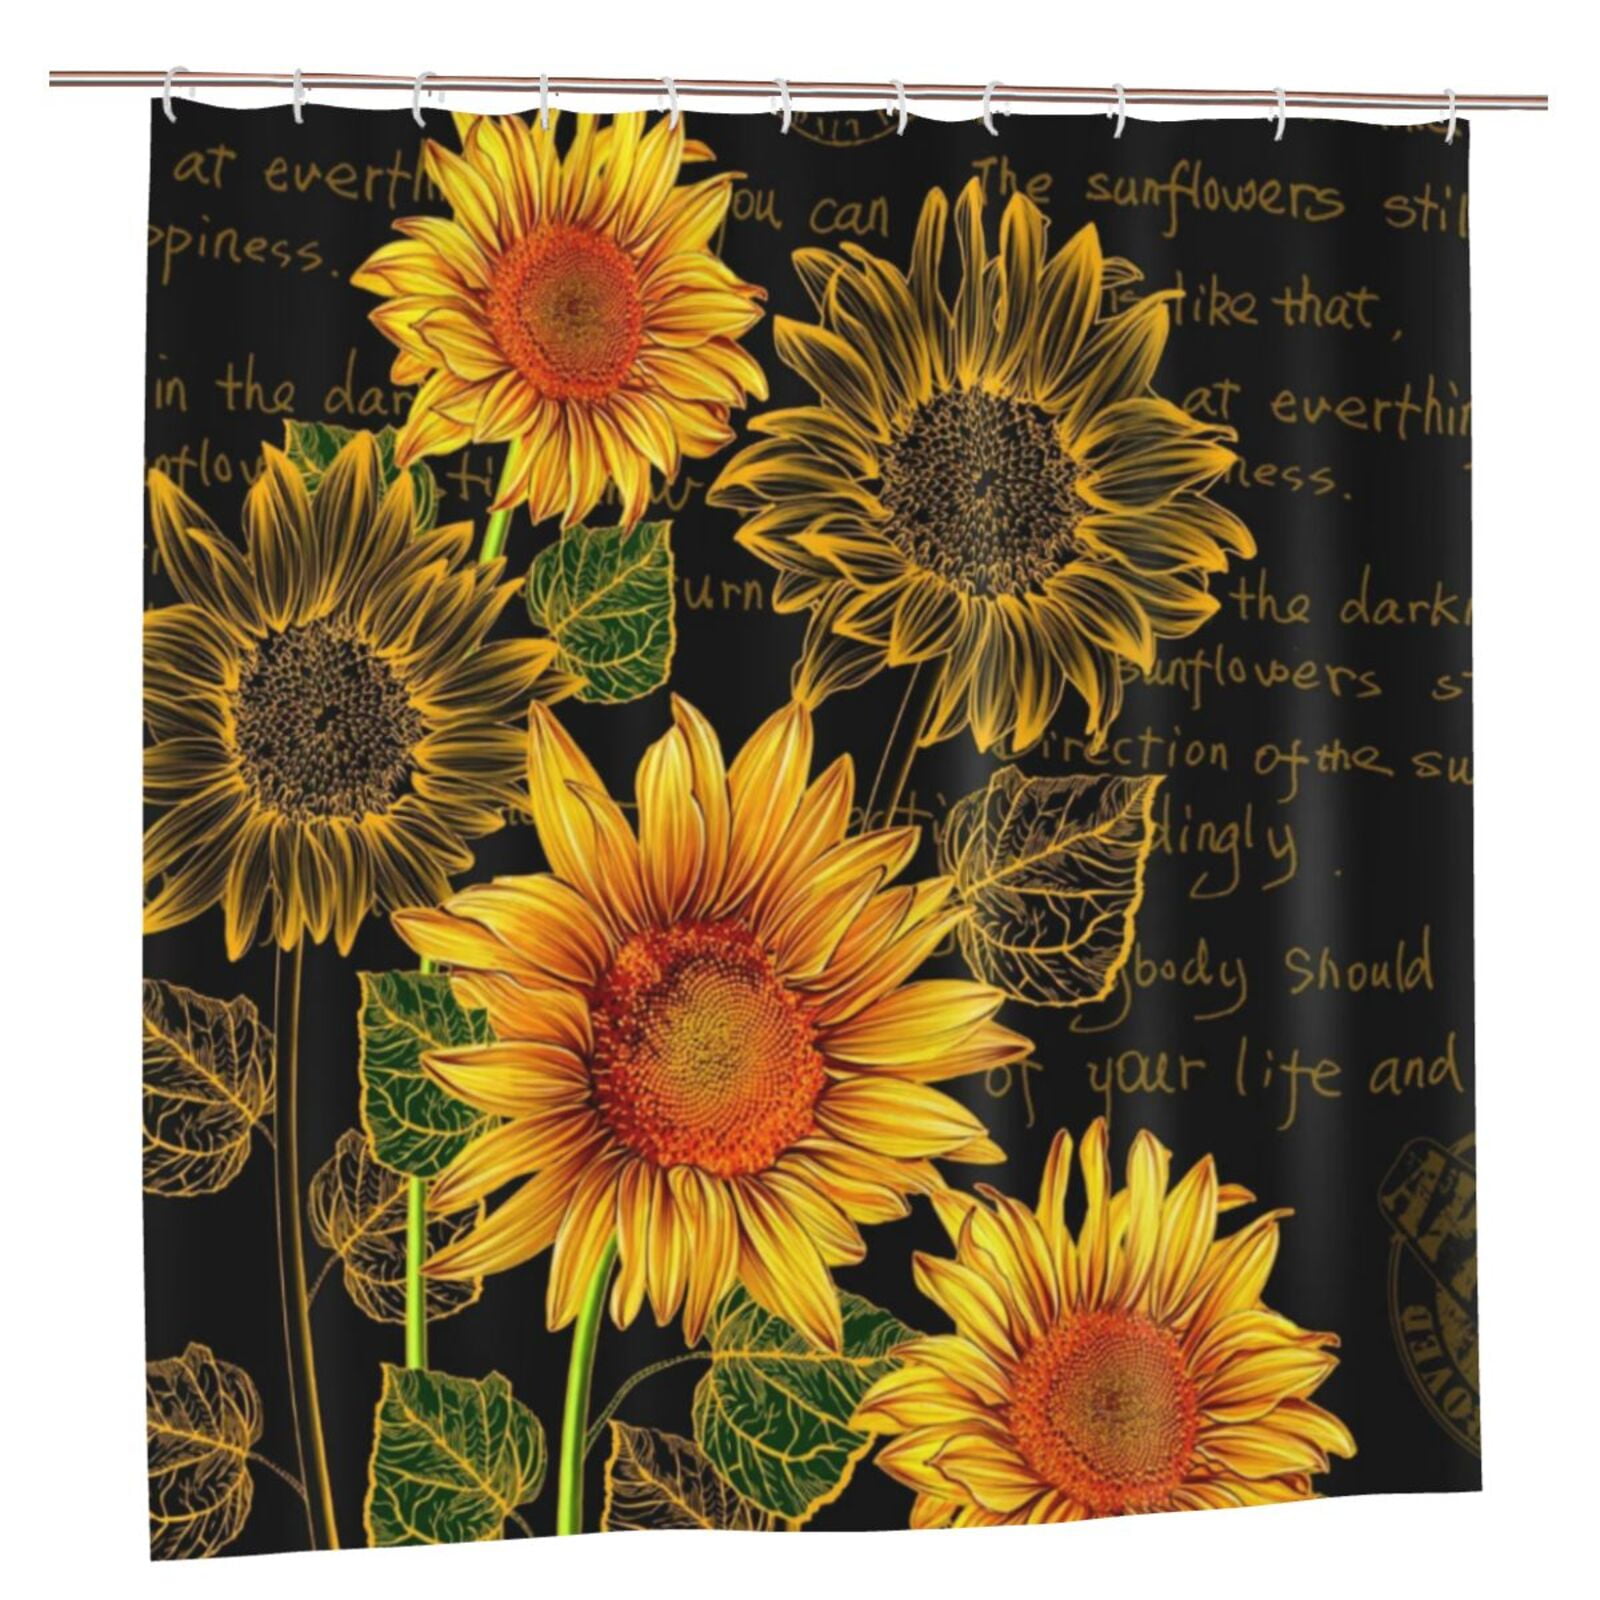 Sunflower Shower Curtains, Wooden Board Sunflowers Shower